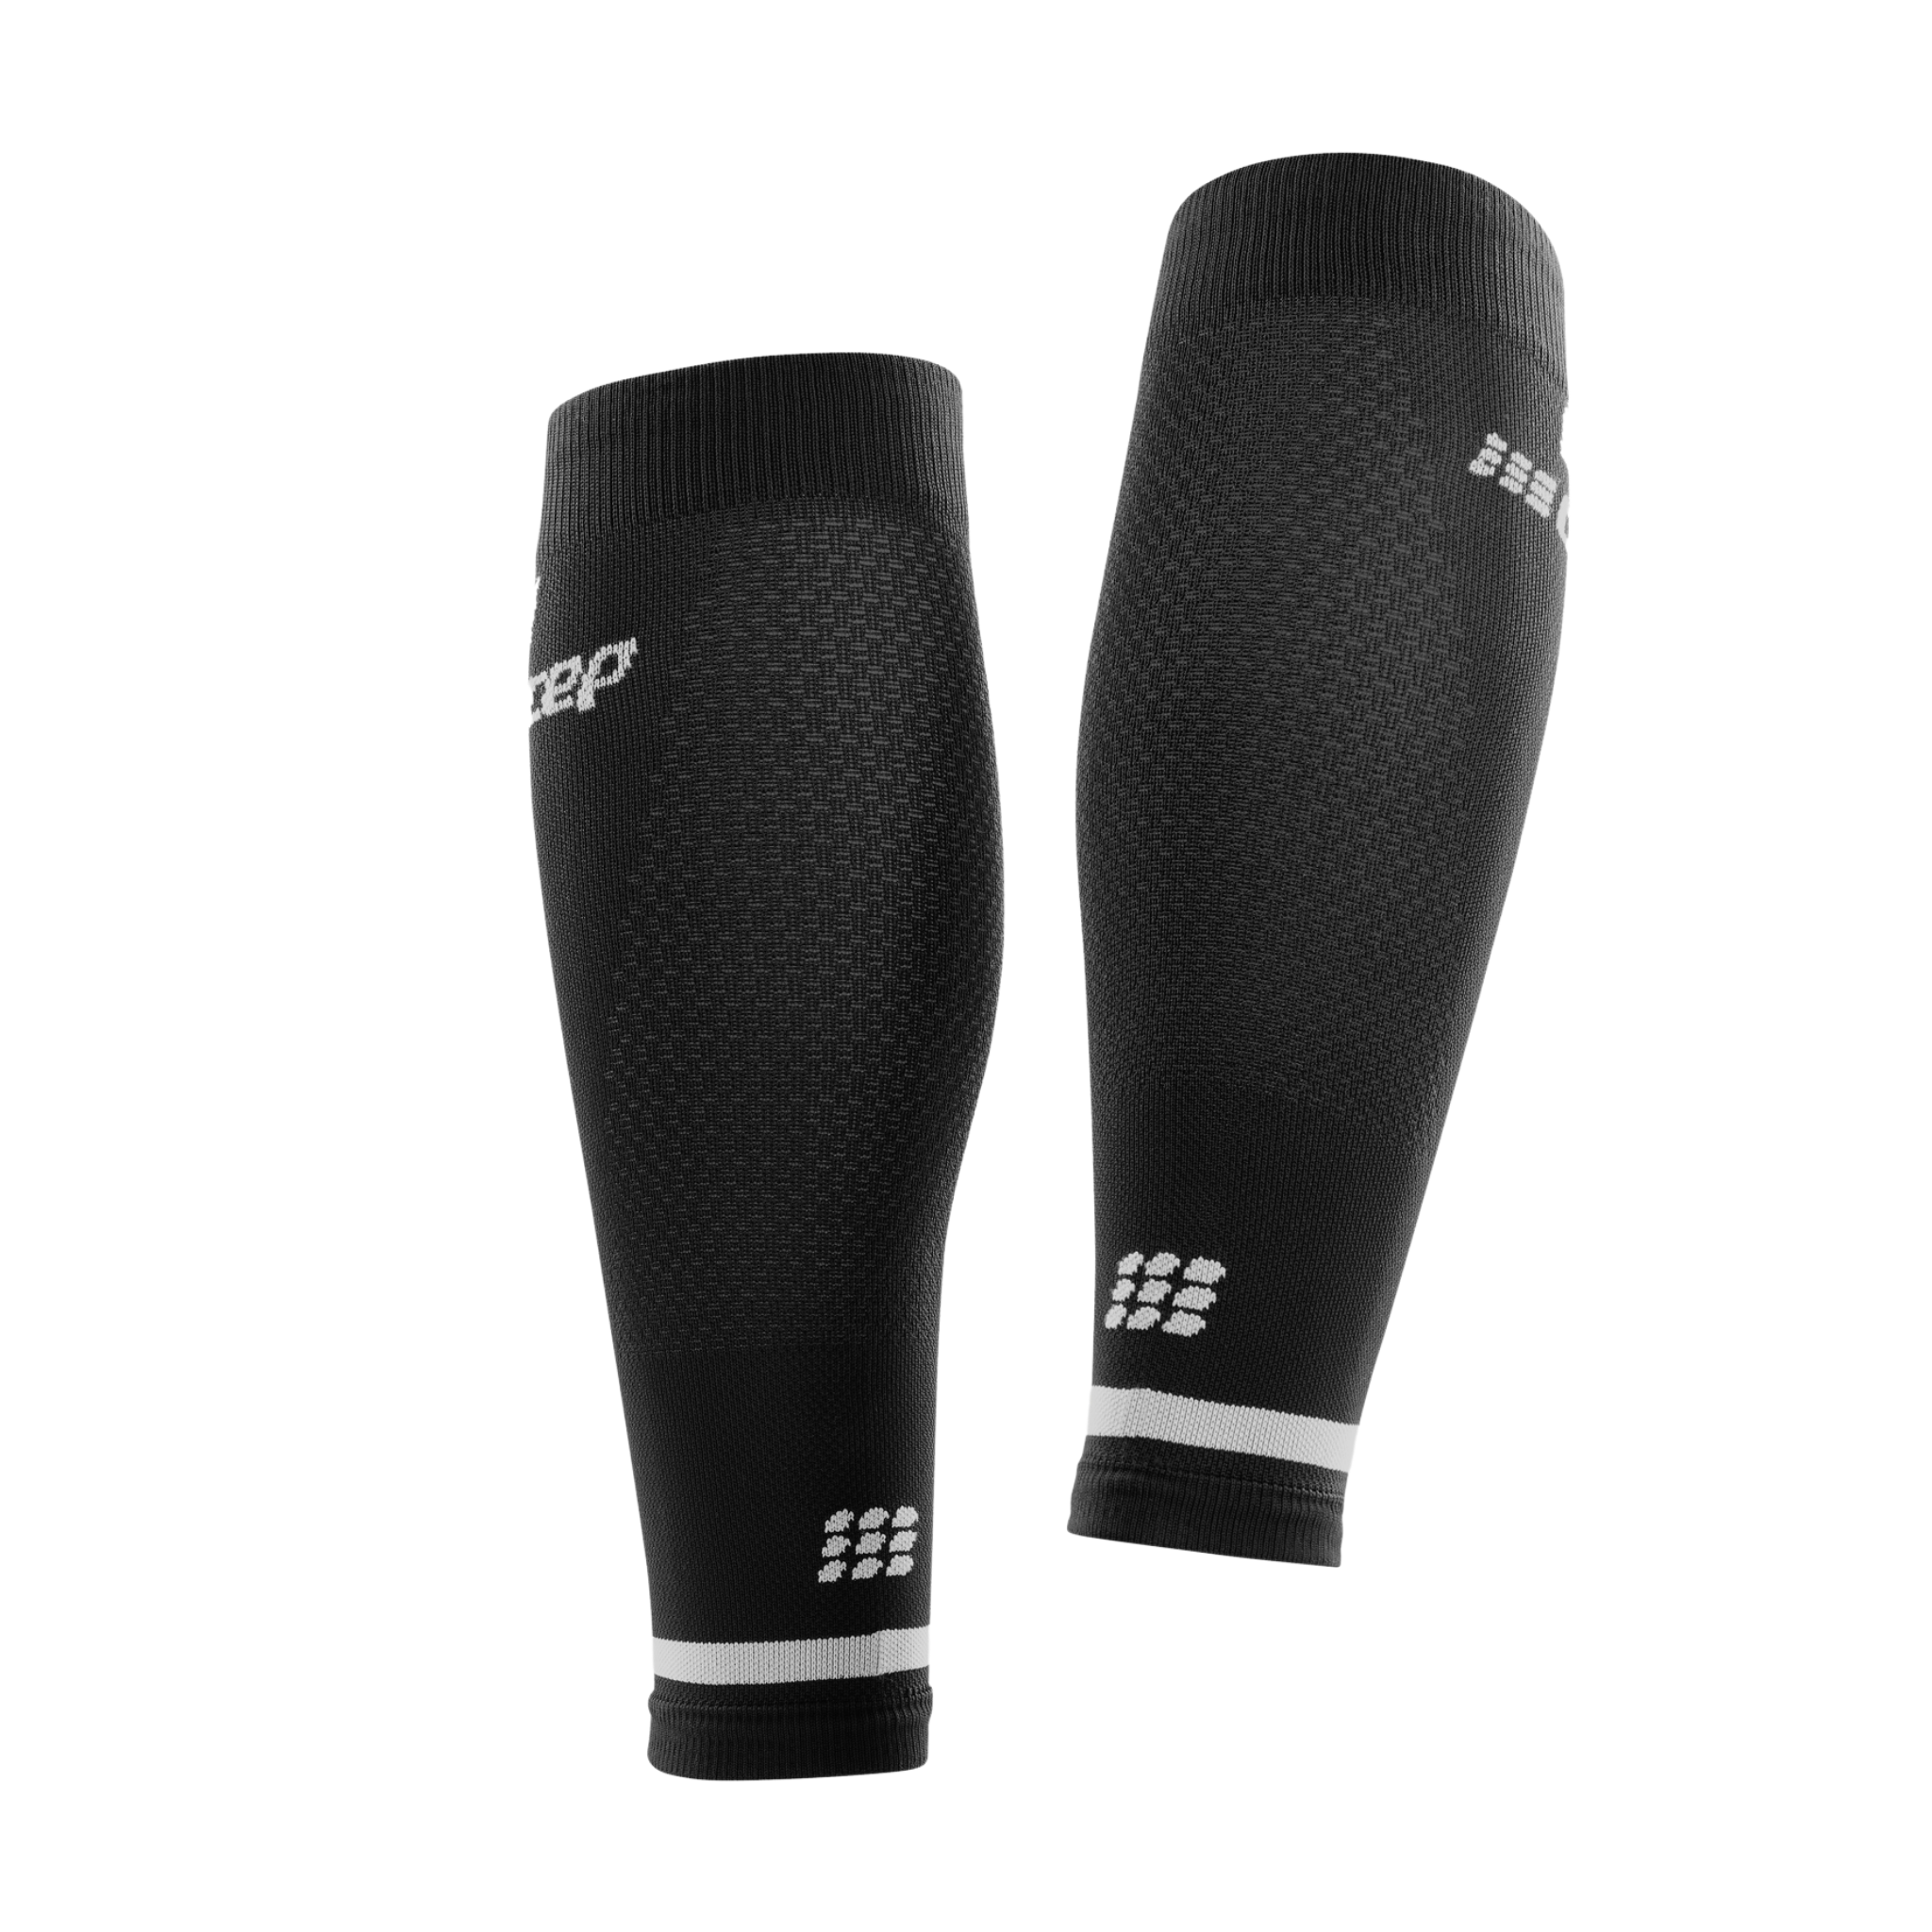 JUST RIDER Compression Sleeve for Men & Women - Best Calf Socks for Running,  Shin Splint, Calf Pain Relief, Leg Support Sleeve for Runners, Medical, Air  Travel, Nursing, Cycling (Black, Medium) 